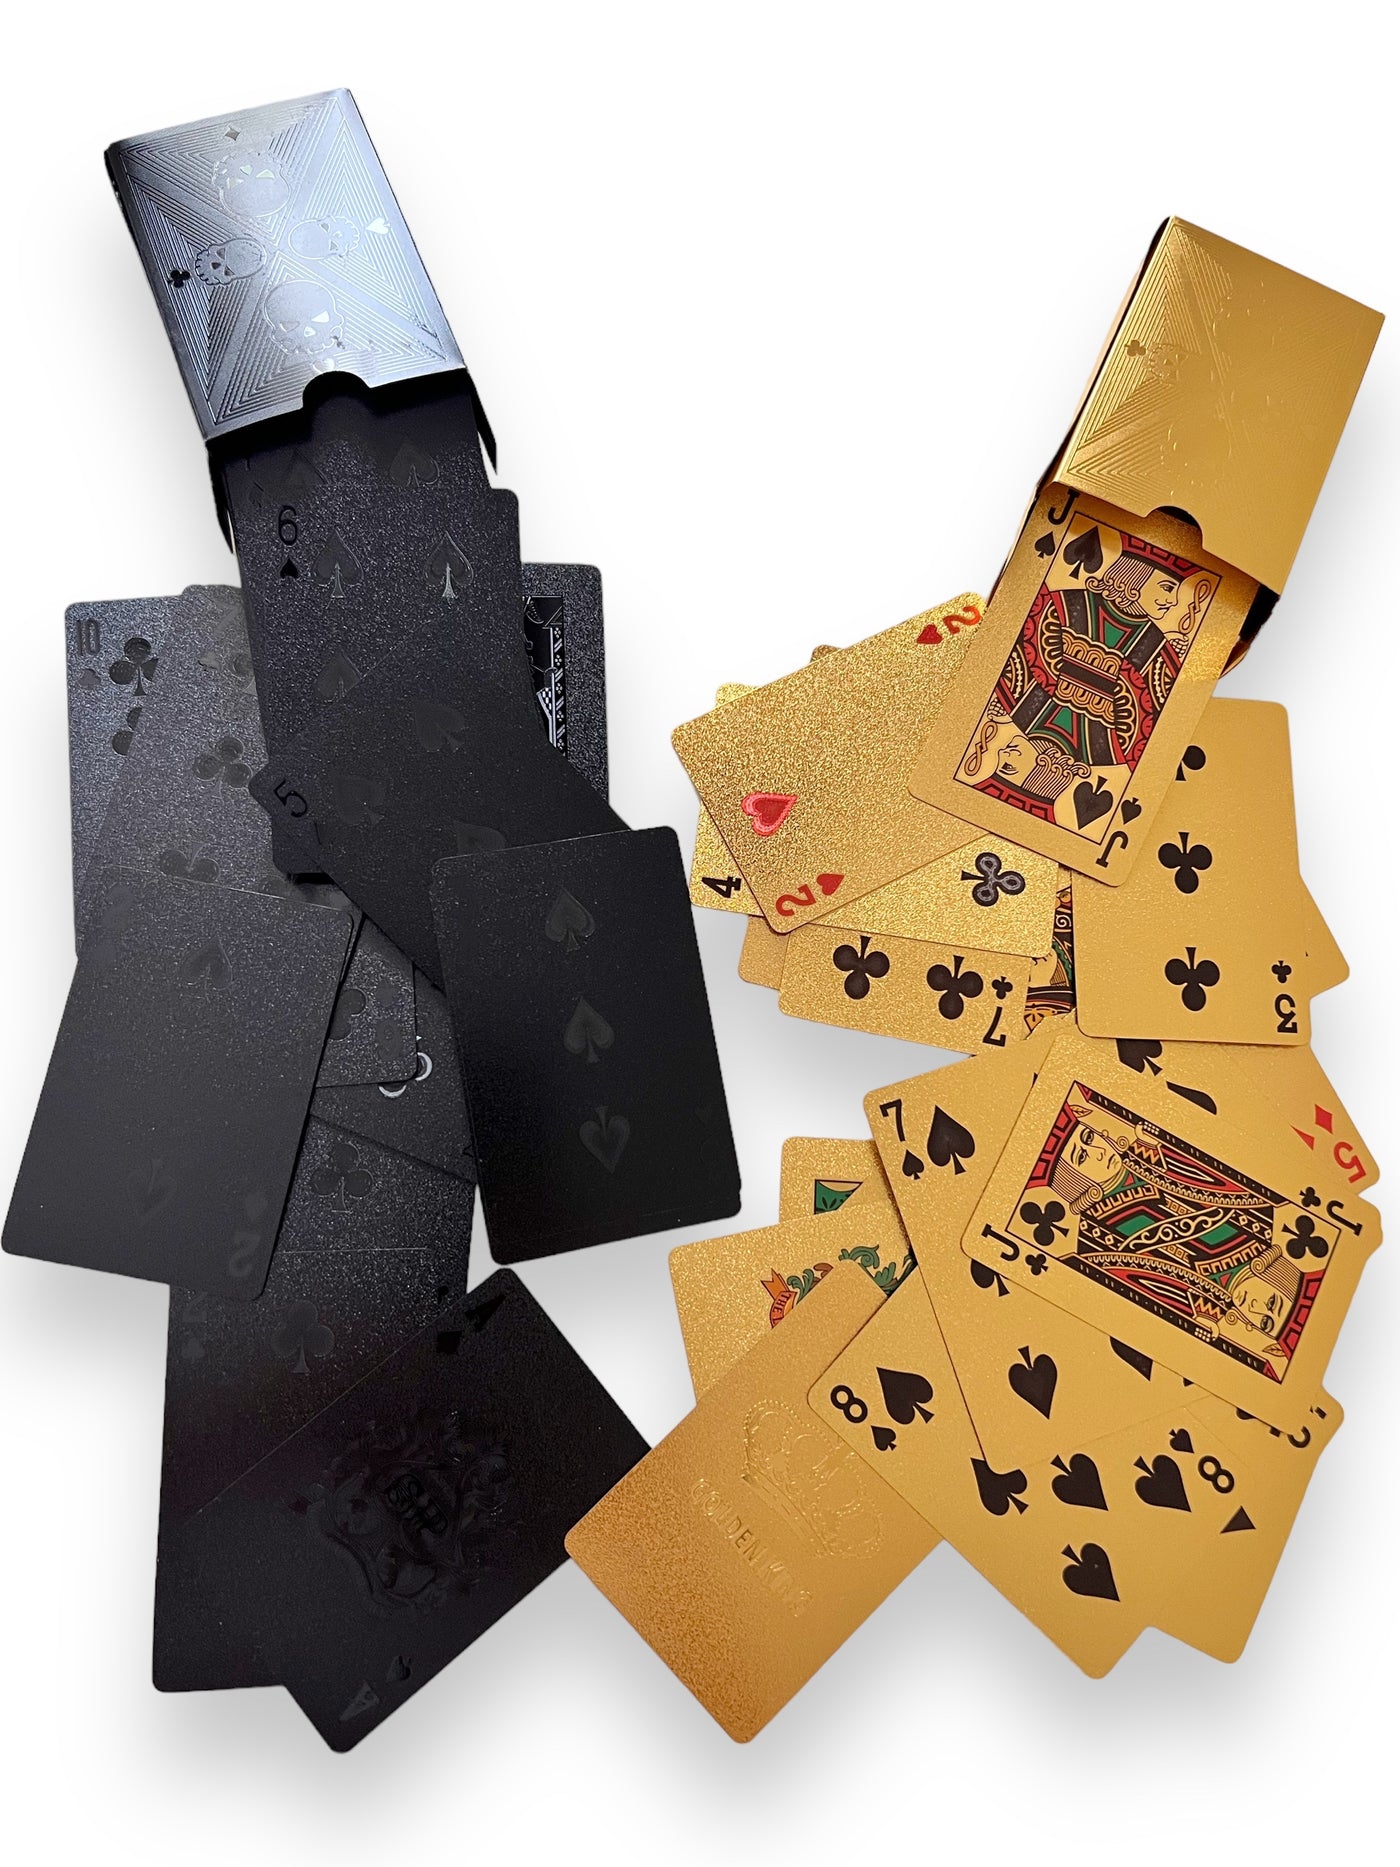 Waterproof playing cards set (Gold + Black) - PROBOXS